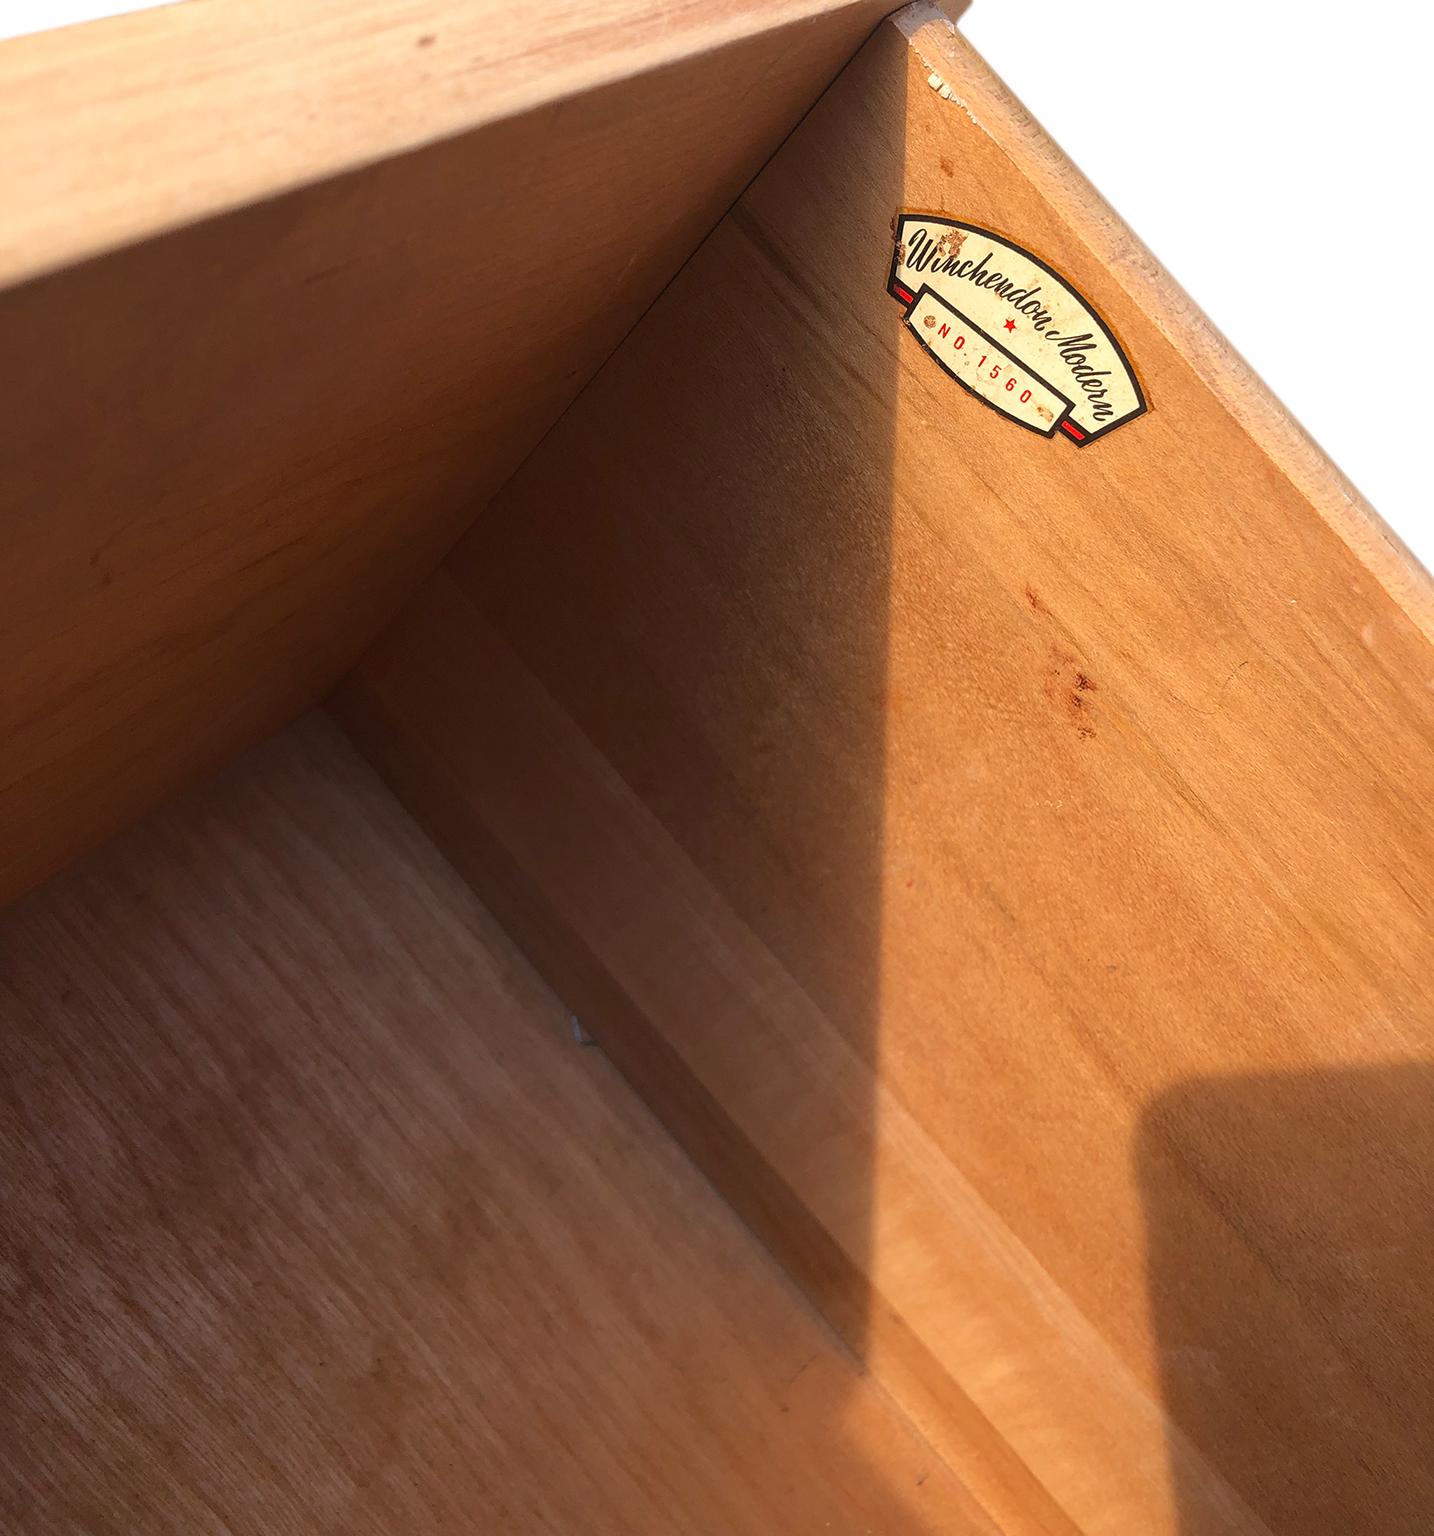 Steel Midcentury Paul McCobb #1560 Double drawer Desk Blonde Maple Finish T Pulls